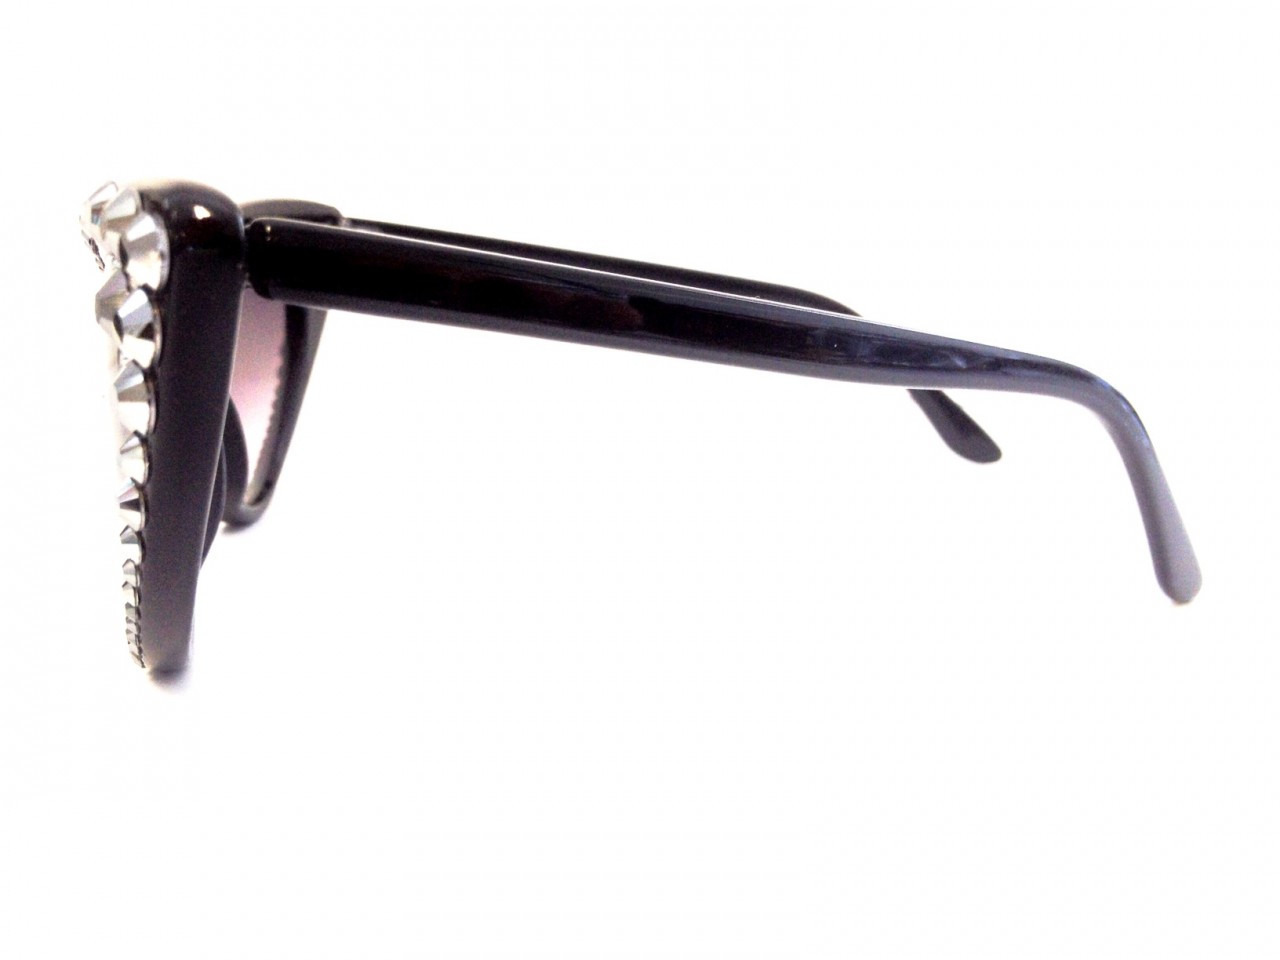 Flame Quartz Photochromic Cat-Eye Sunglasses